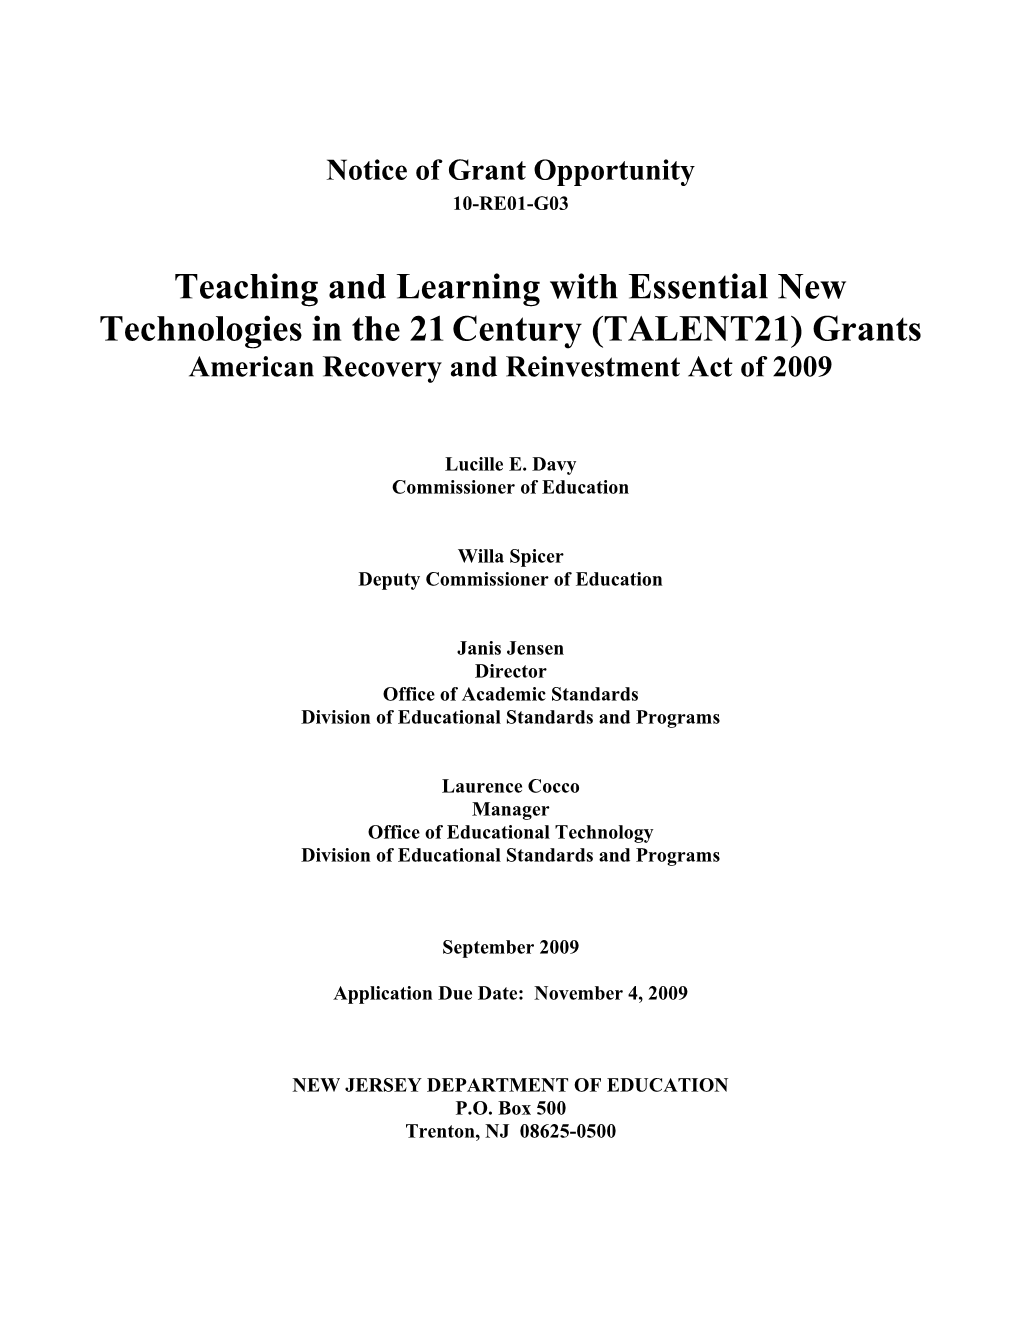 Section Ii: Grant Program Information s3